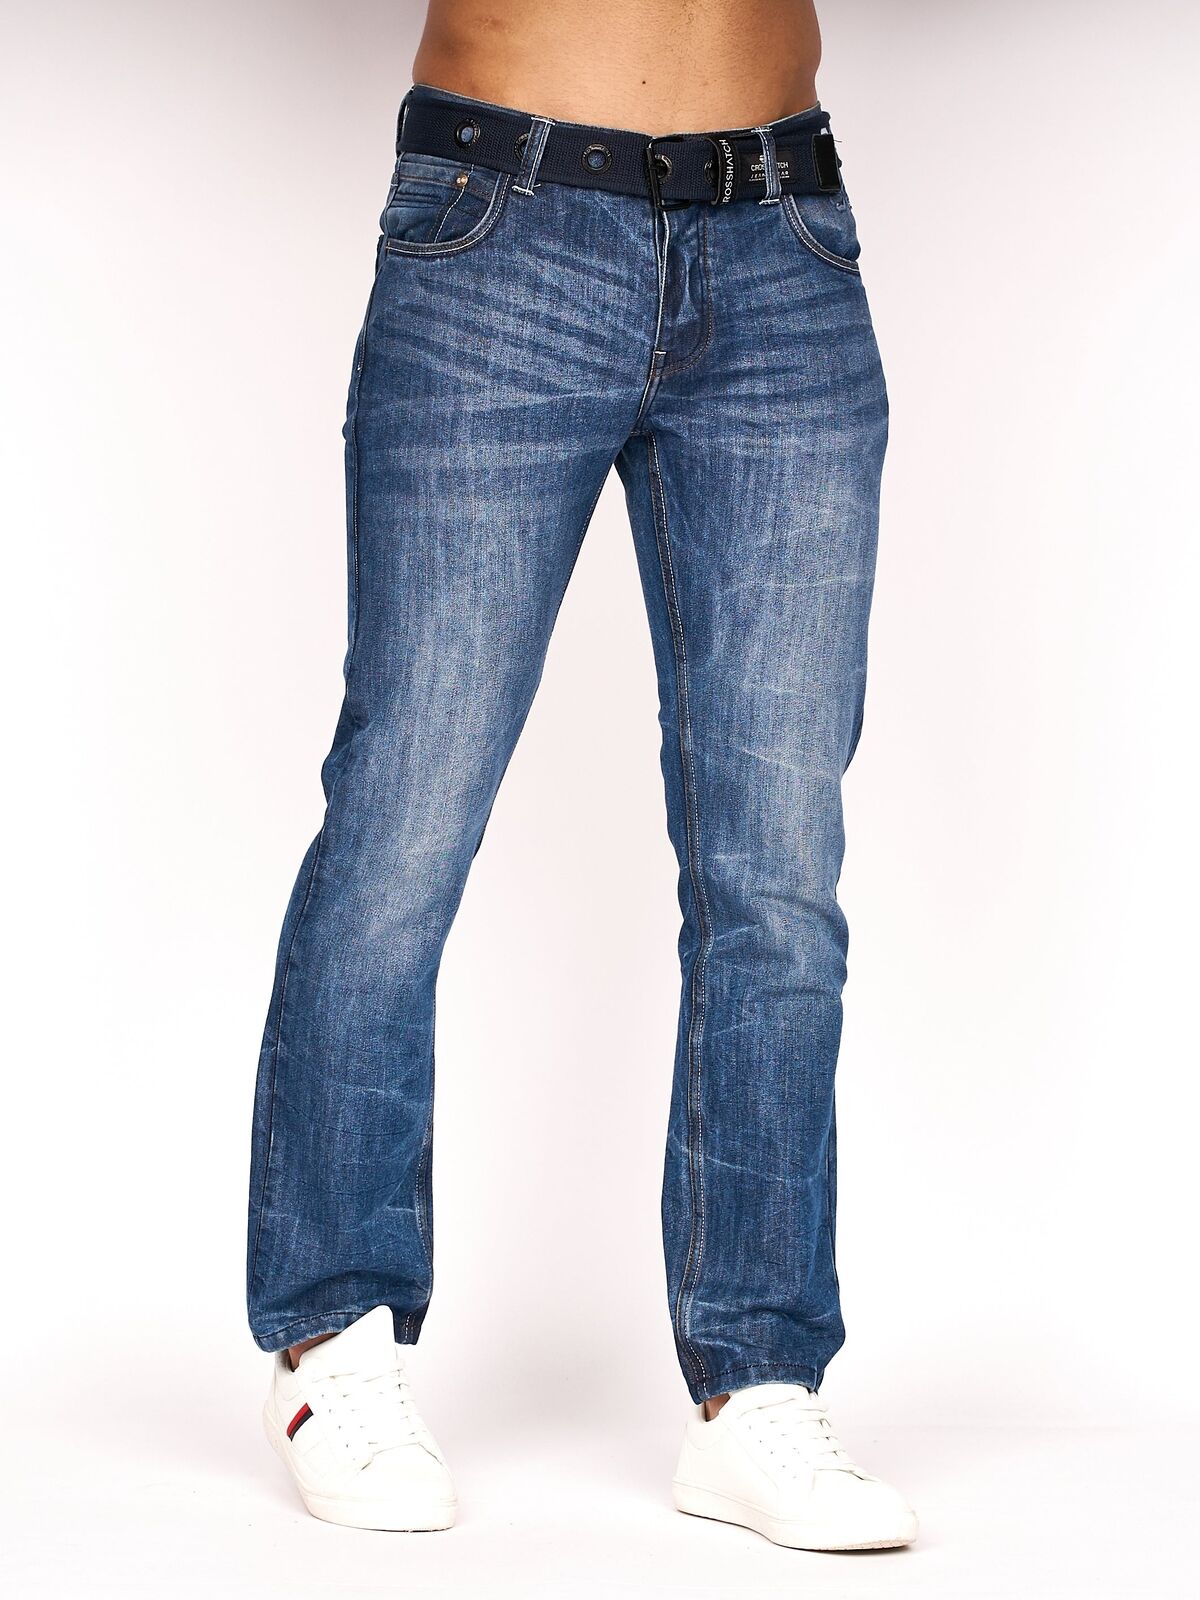 Crosshatch - Mens New Embossed Techno Denim Jeans Stone Wash | eBay